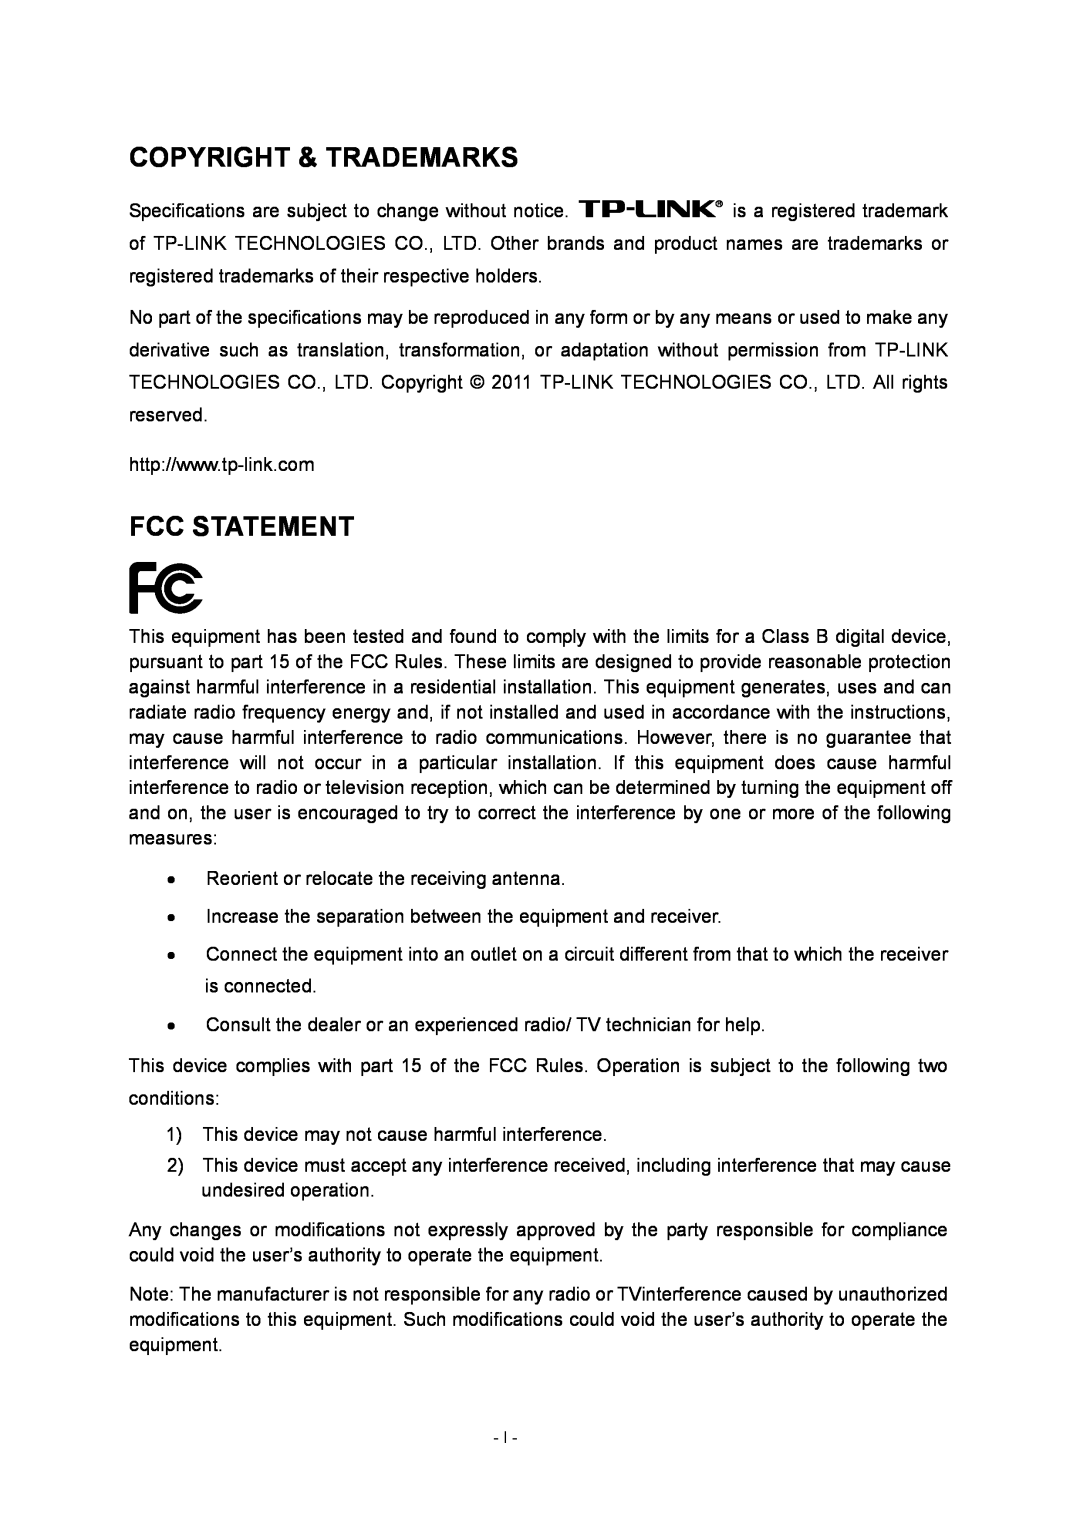 TP-Link TL-WR700N manual Copyright & Trademarks, Fcc Statement 